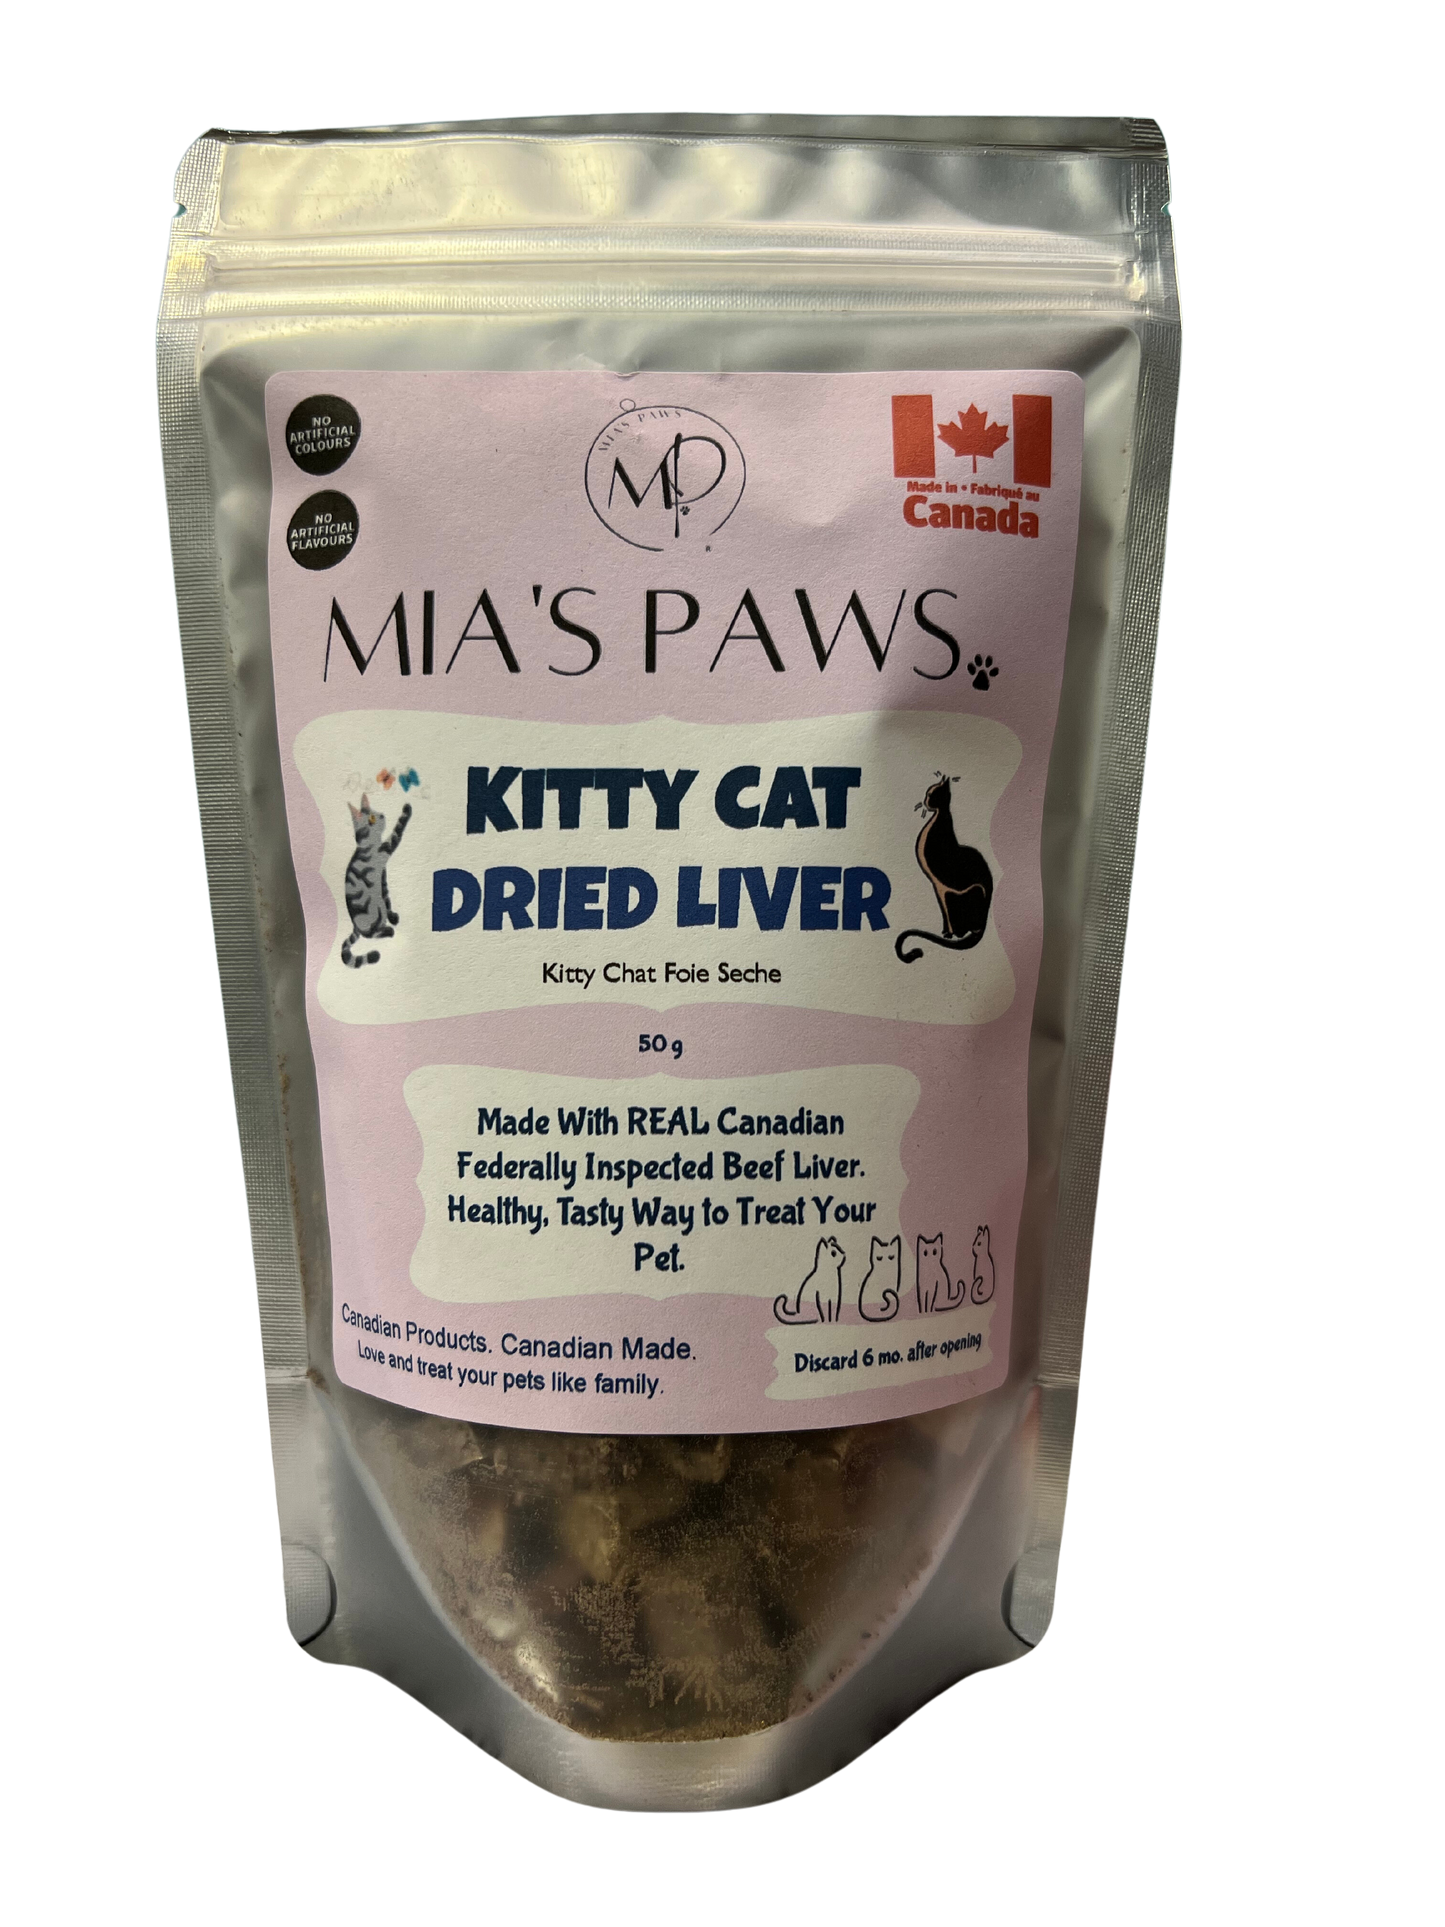 Kitty Cat Dried Liver - Mia's Paws